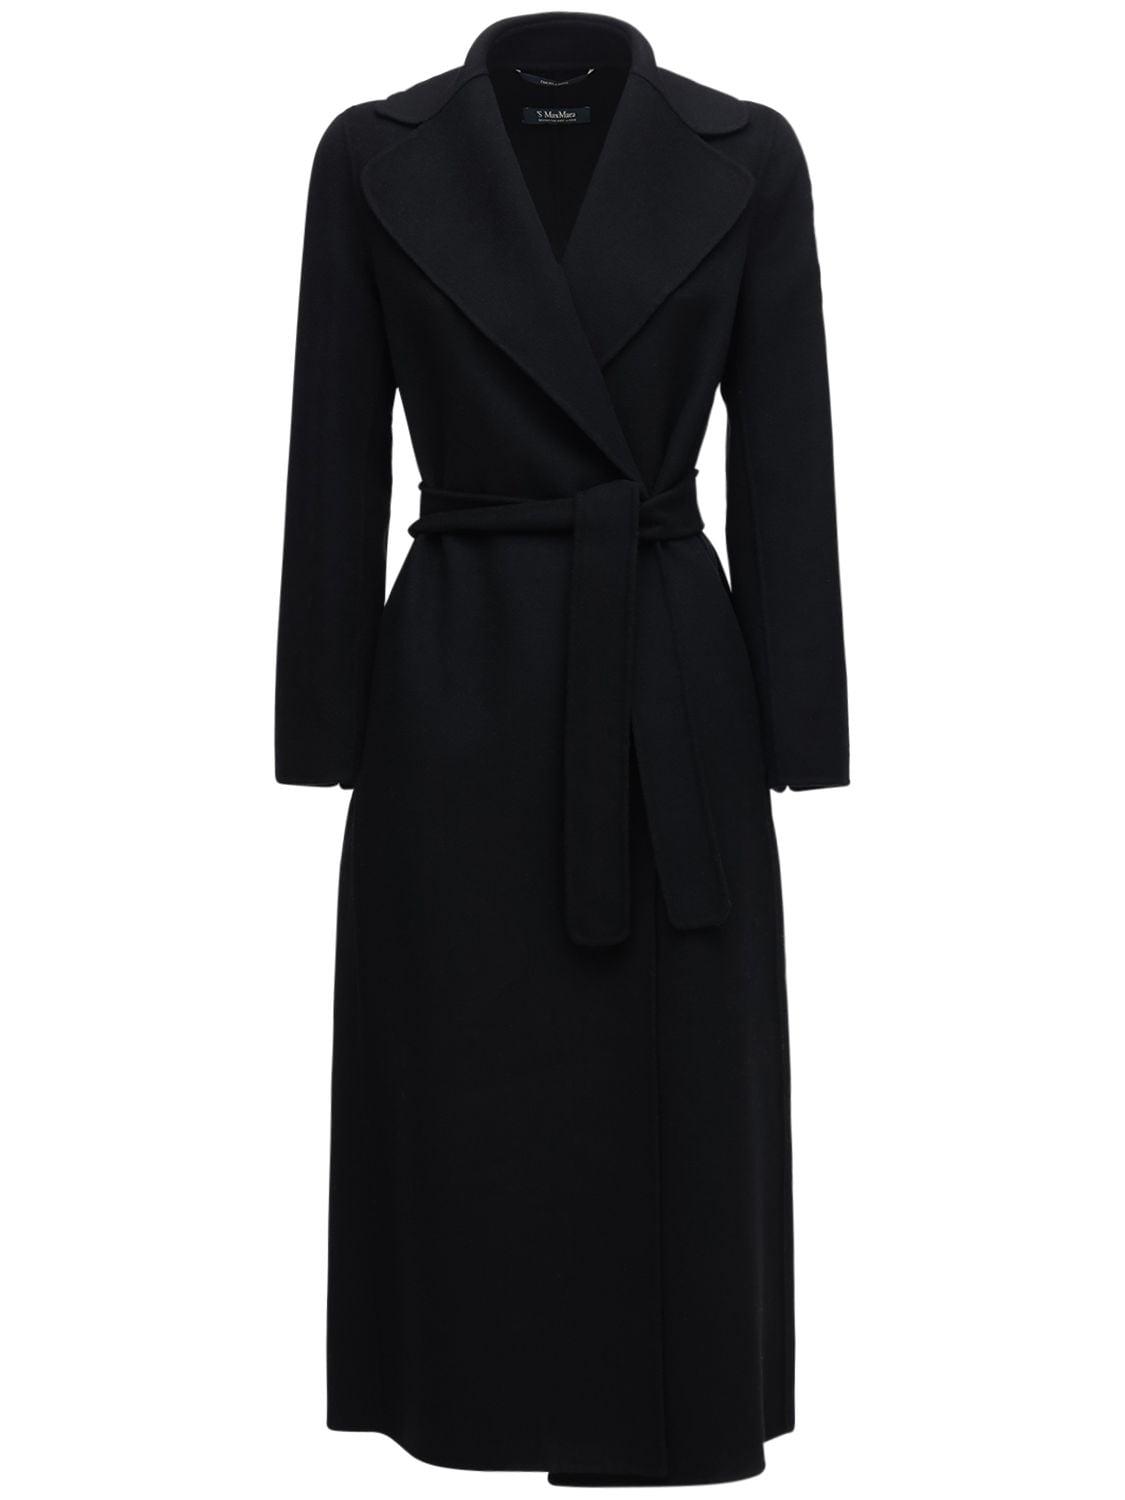 Max Mara Poldo Belted Wool Coat in Black | Lyst